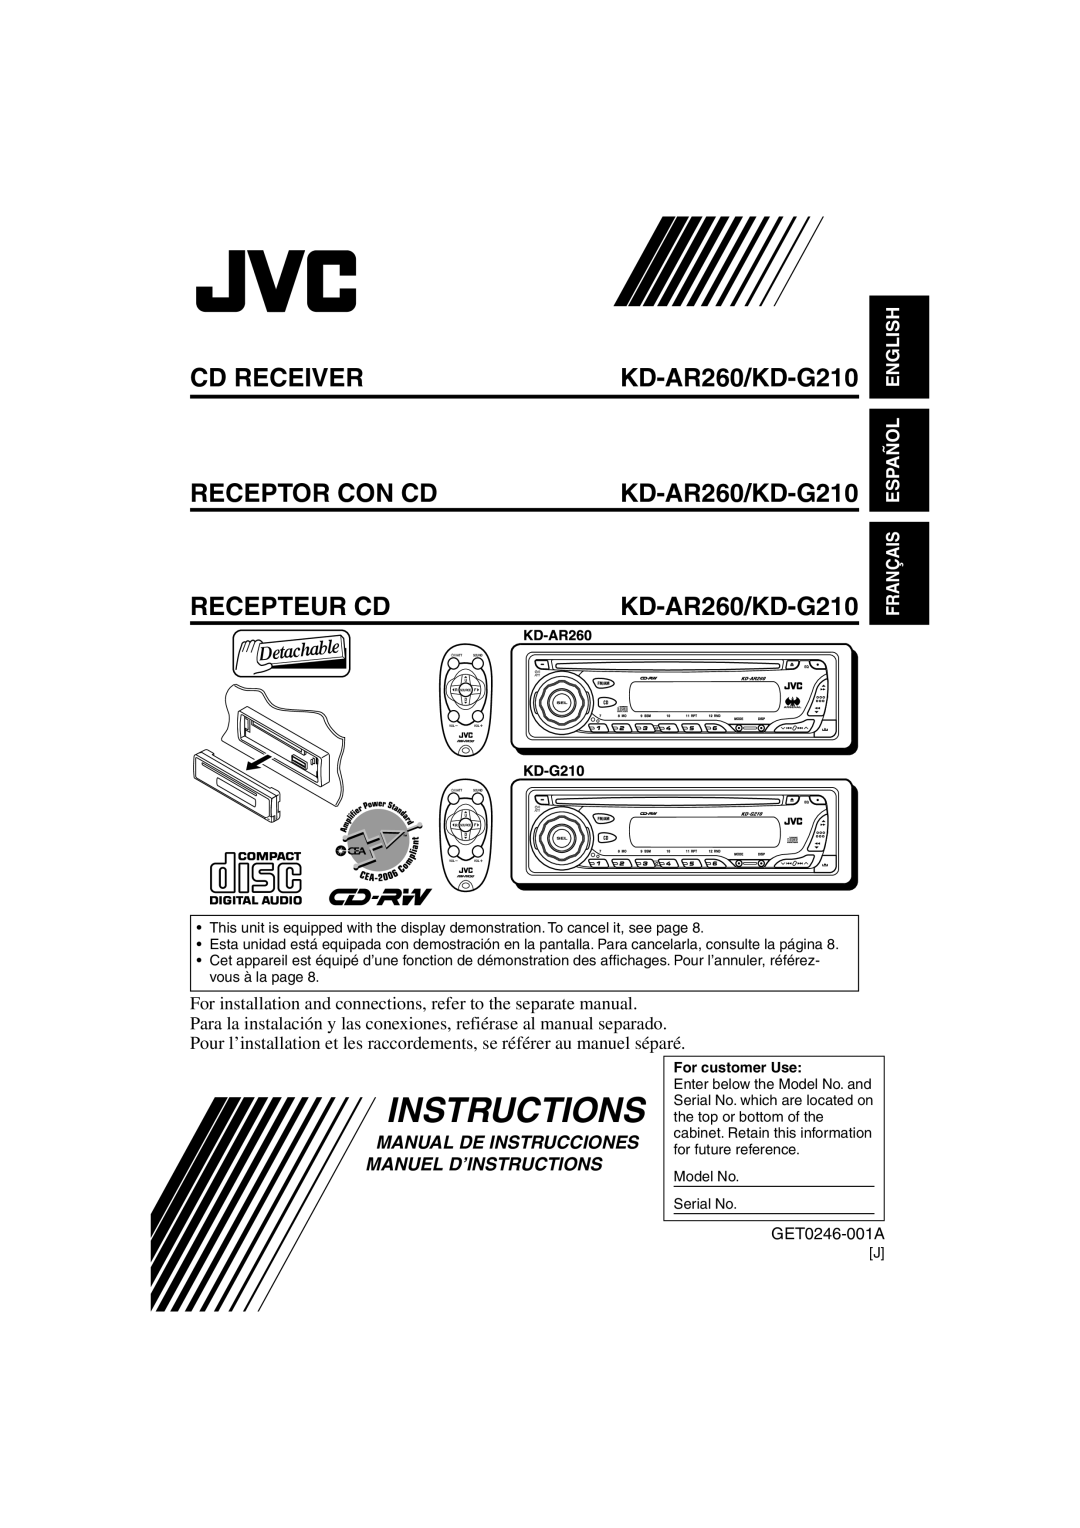 JVC manual Cd Receiver Receptor Con Cd Recepteur Cd, KD-AR260/KD-G210 KD-AR260/KD-G210, English Espa Olñ, Instructions 